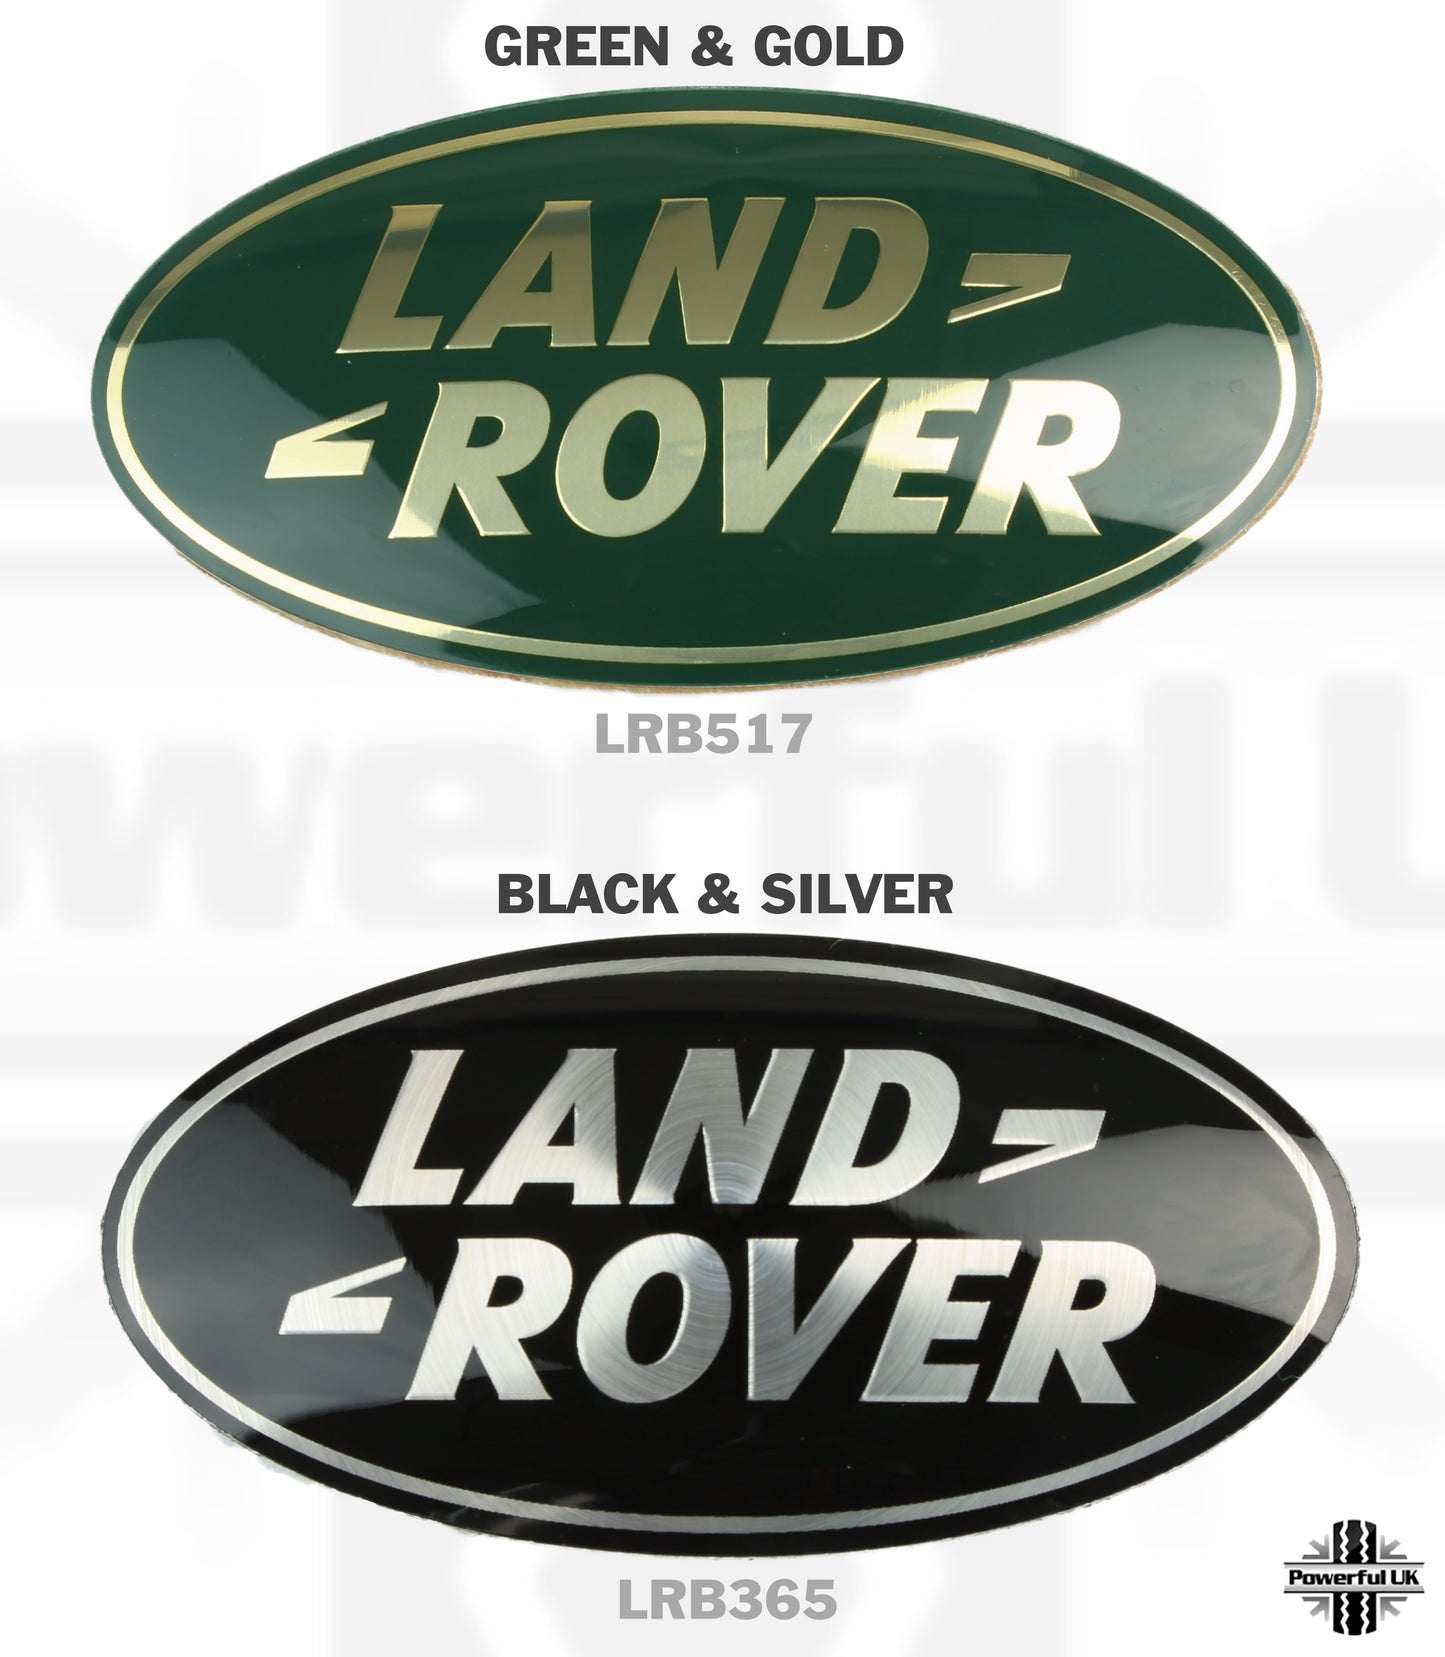 Genuine Rear Door Badge - Green & Gold - for Land Rover Freelander 1